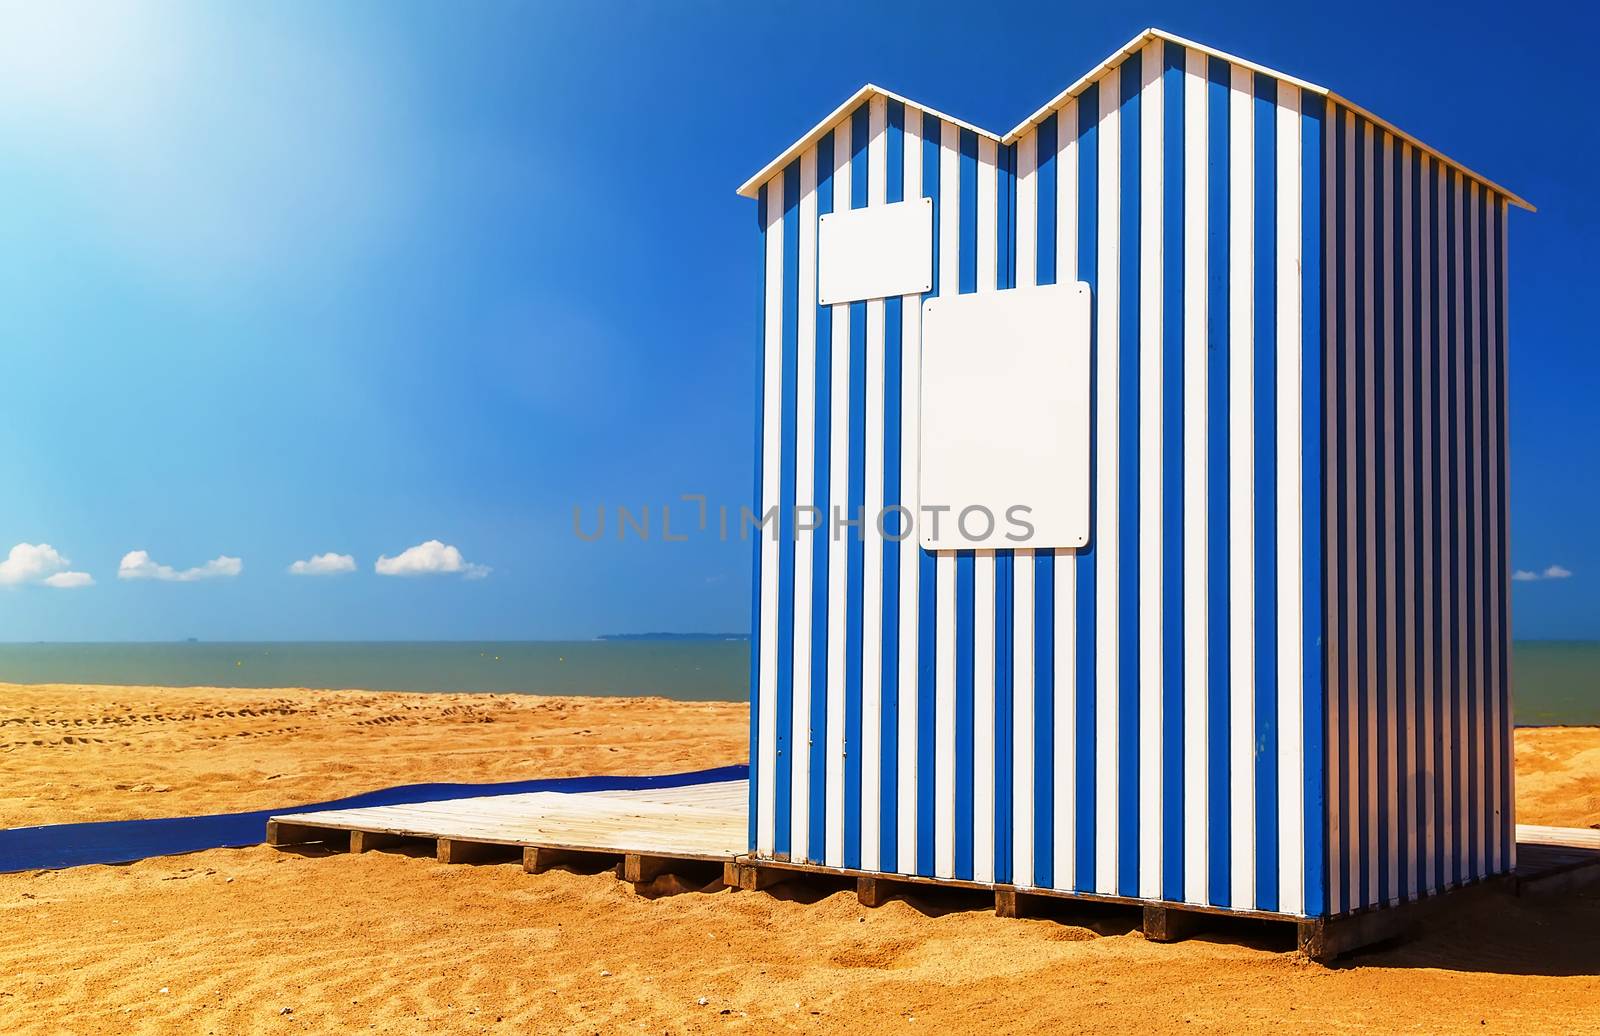 cabins on a beach in benidorm by pixinoo